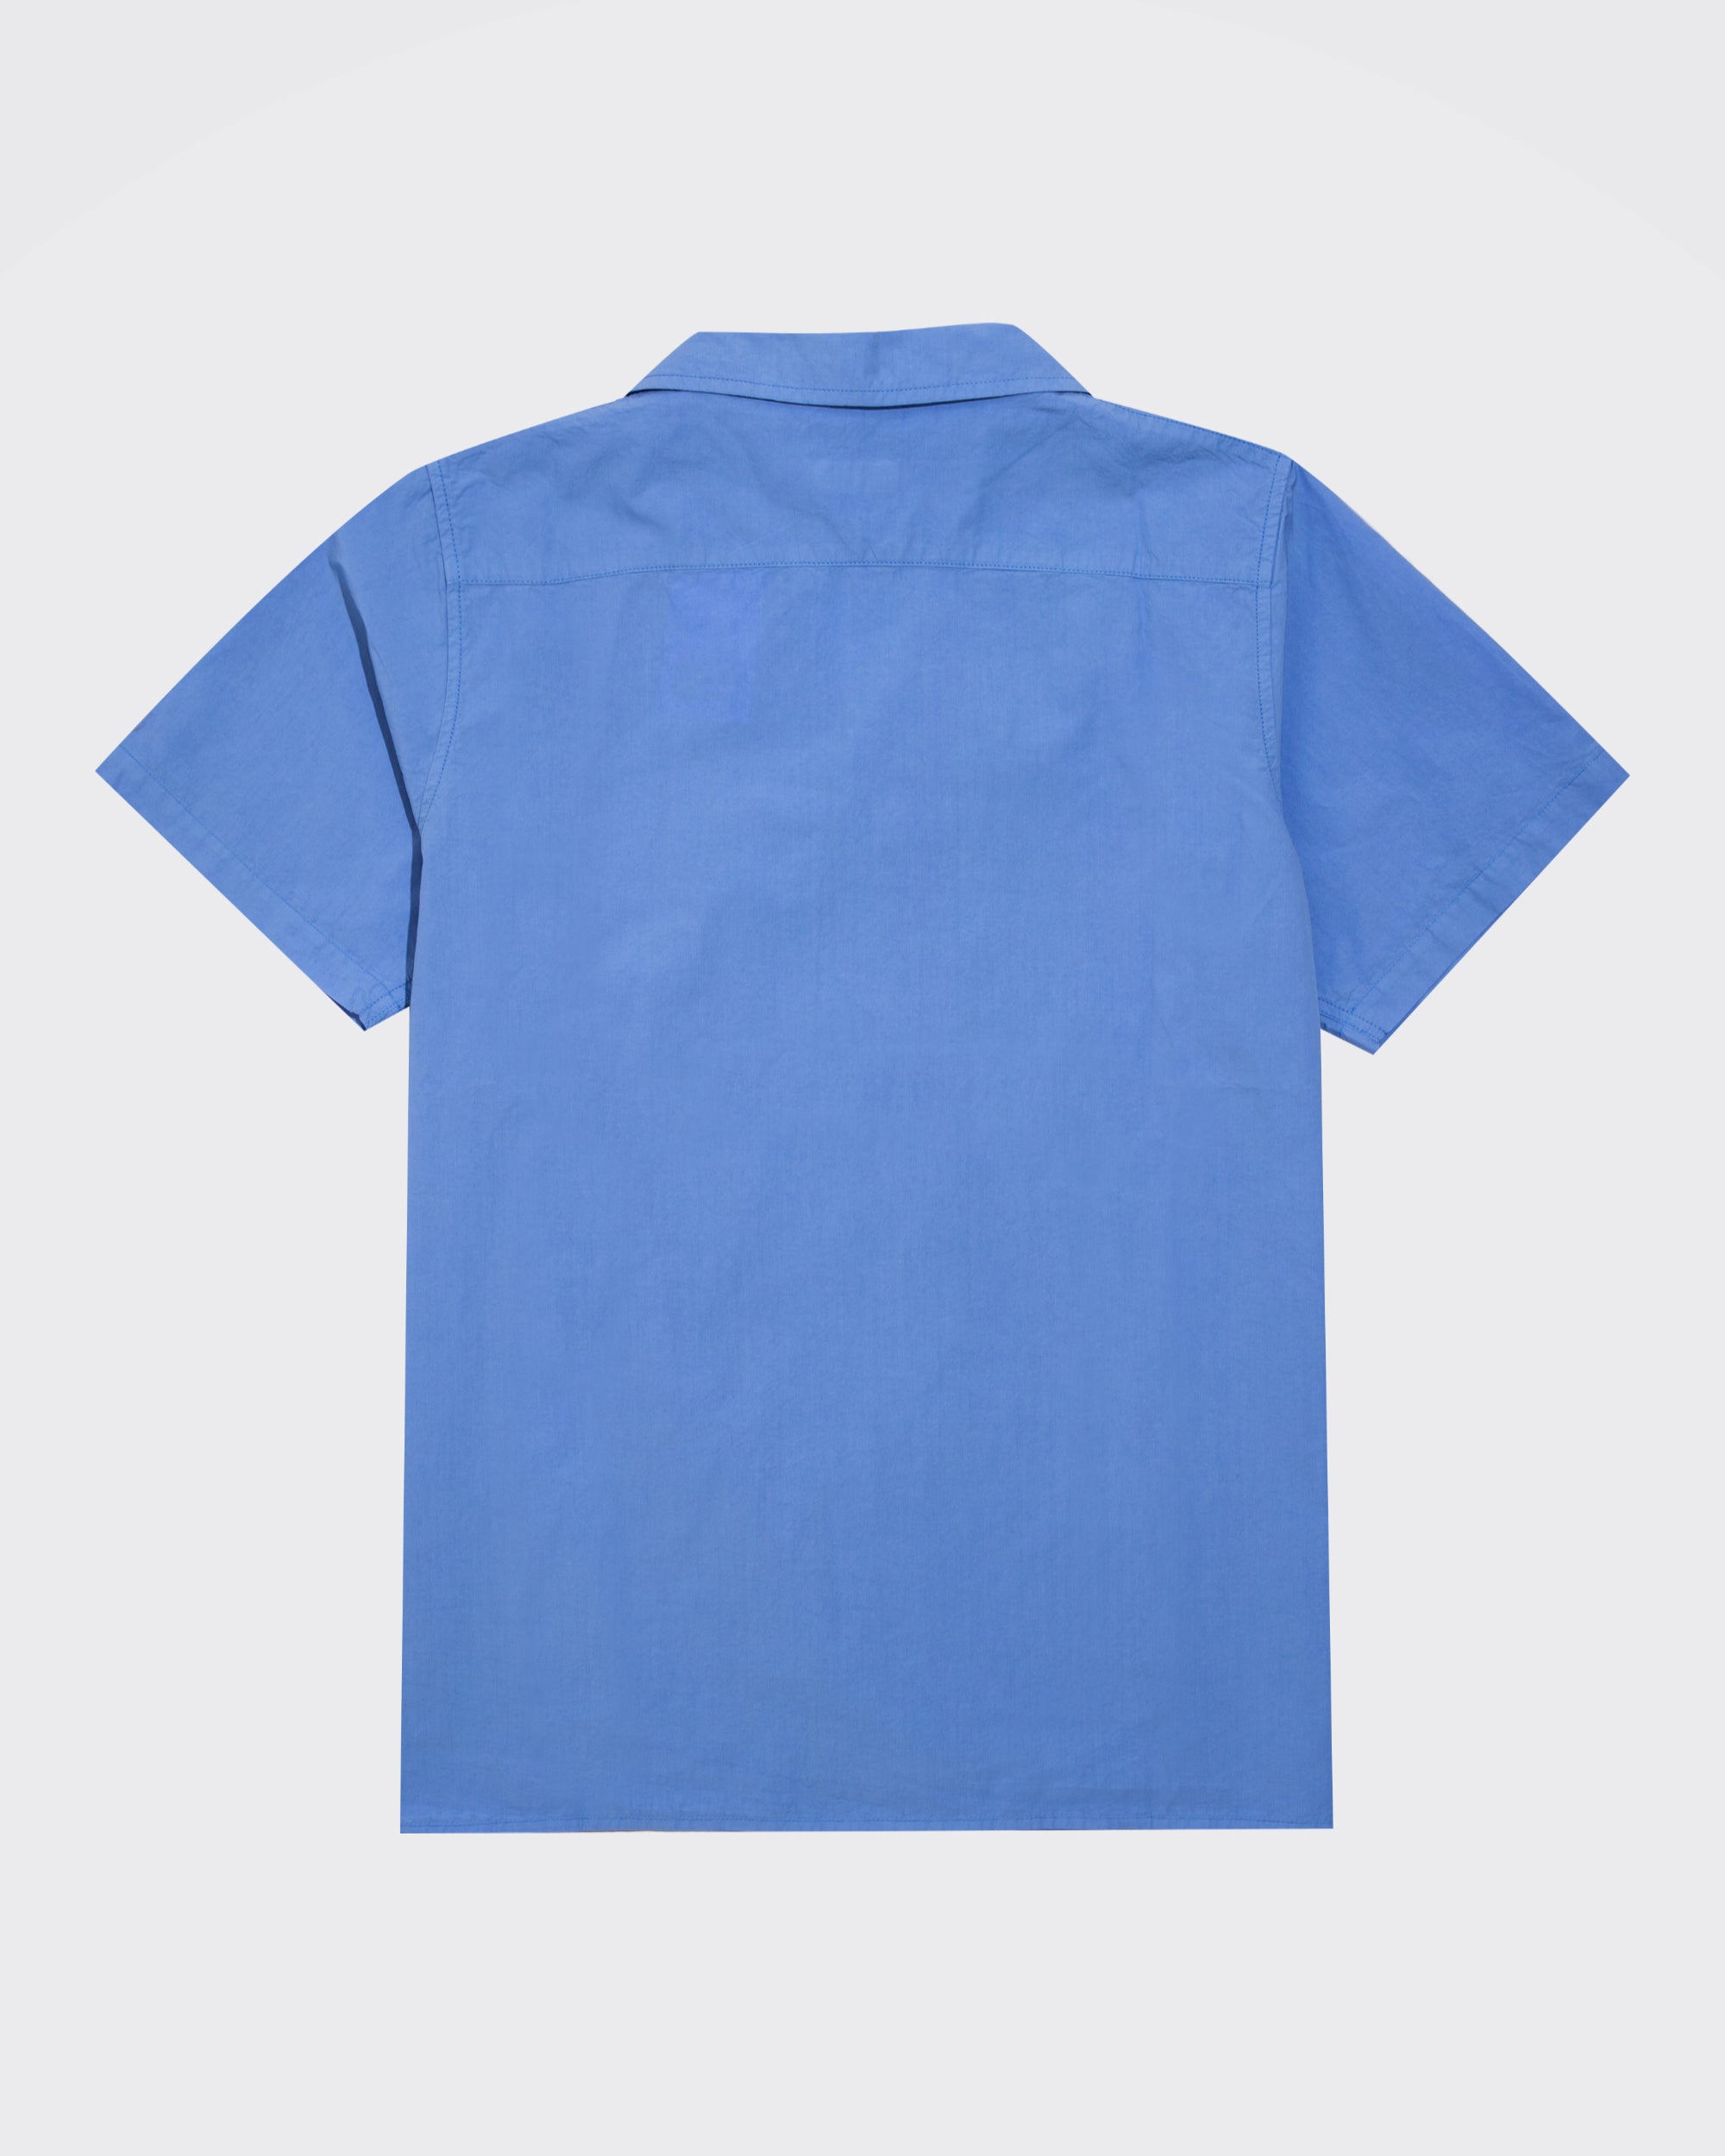 Reception - Shirt - Daily - SS Bowling - Granada Blue